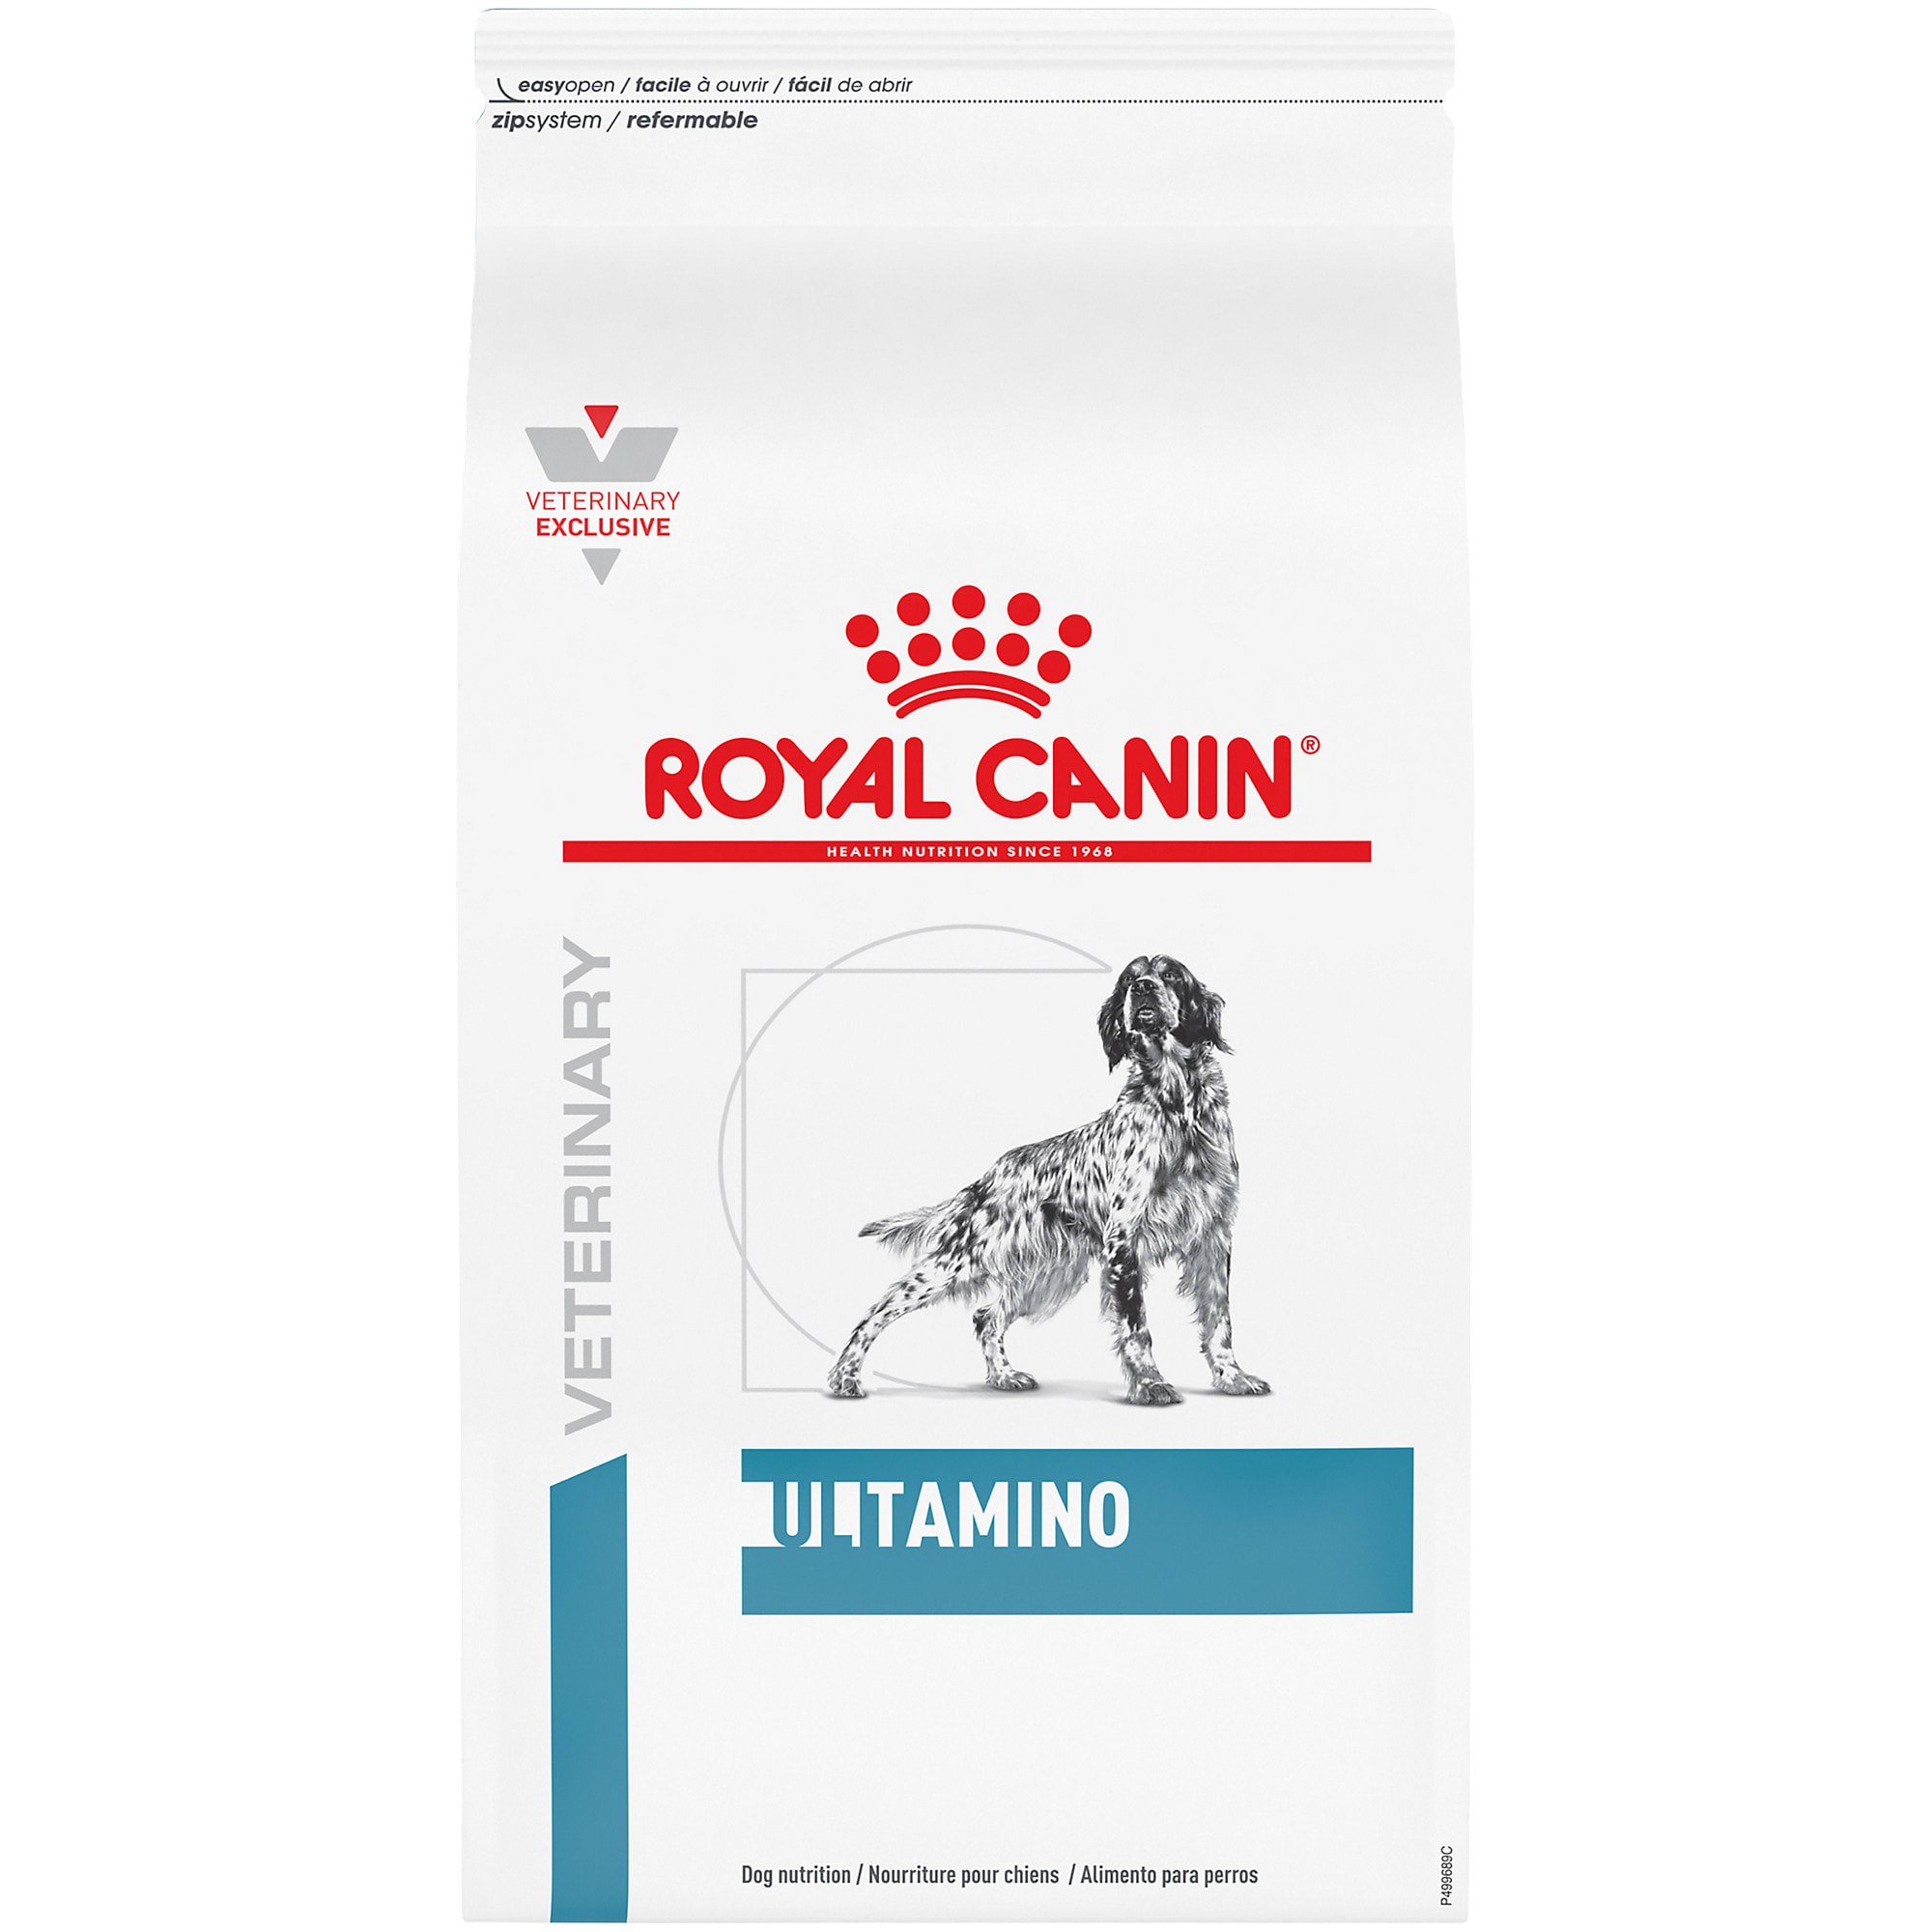 royal canin ultamino ingredients